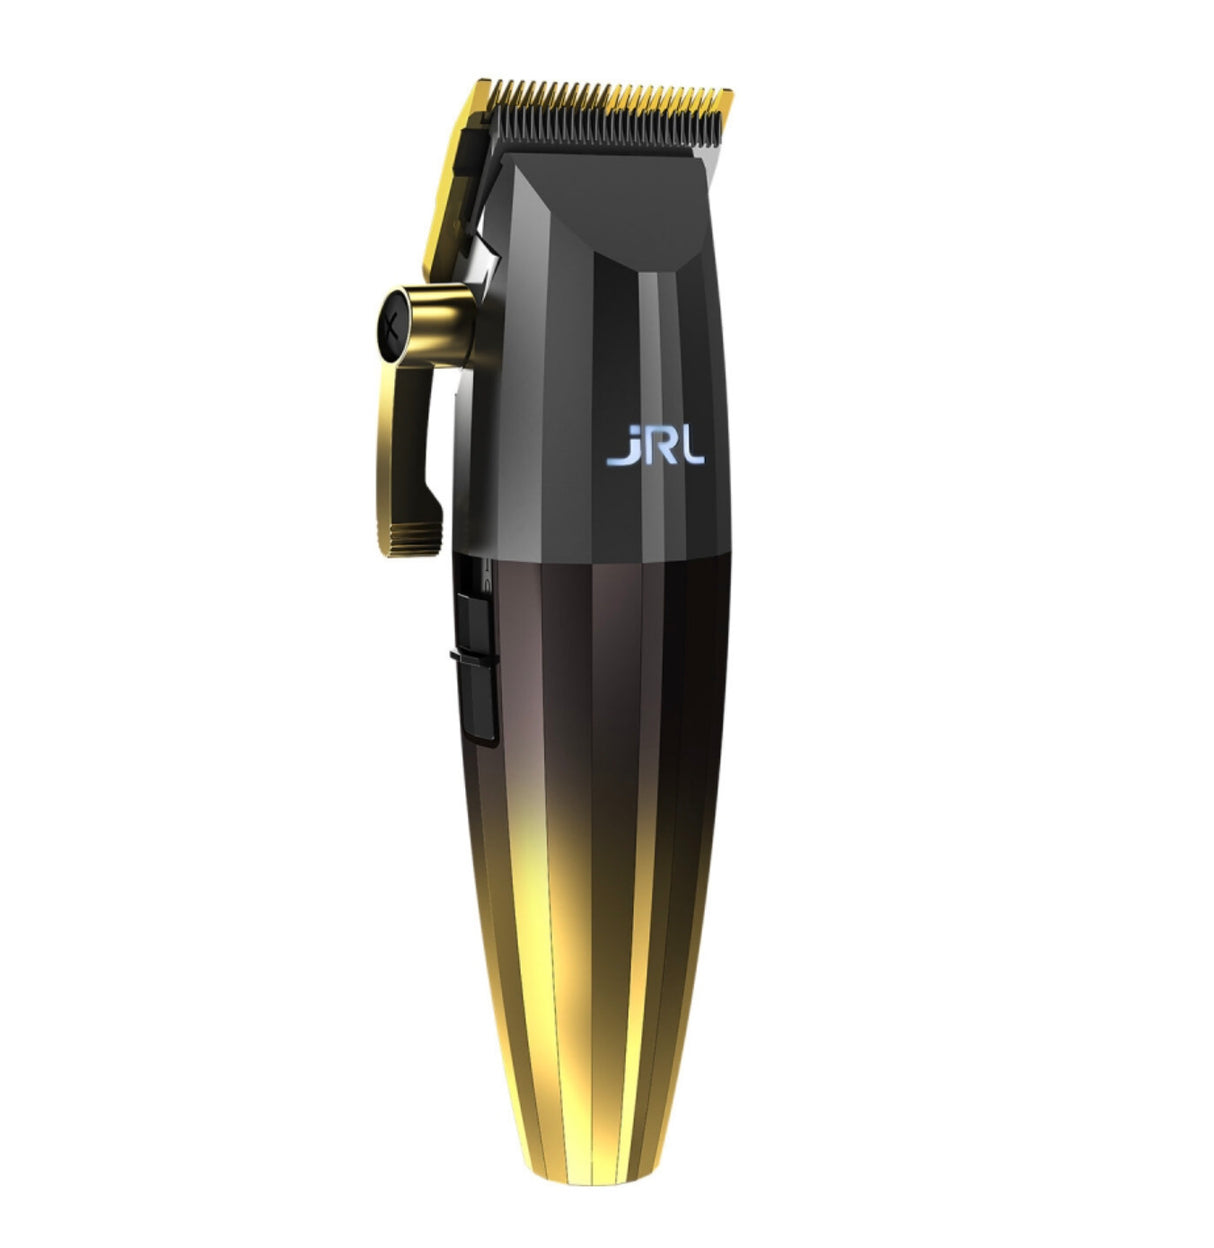 JRL 2020C Clipper Gold Edition